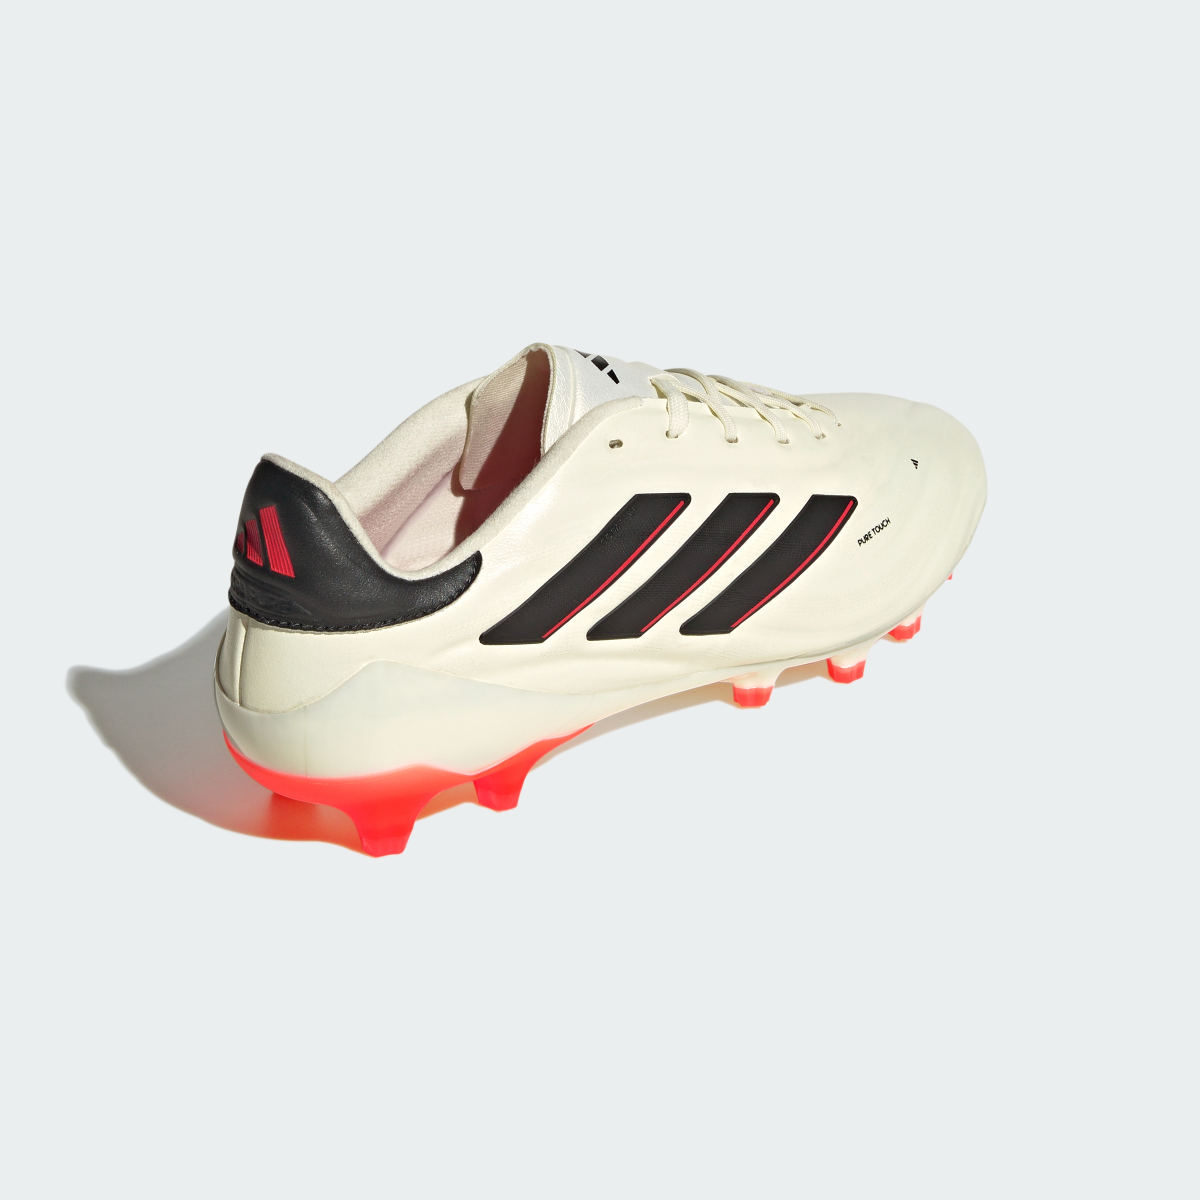 Adidas Copa Pure II Elite Artificial Grass Boots. 9